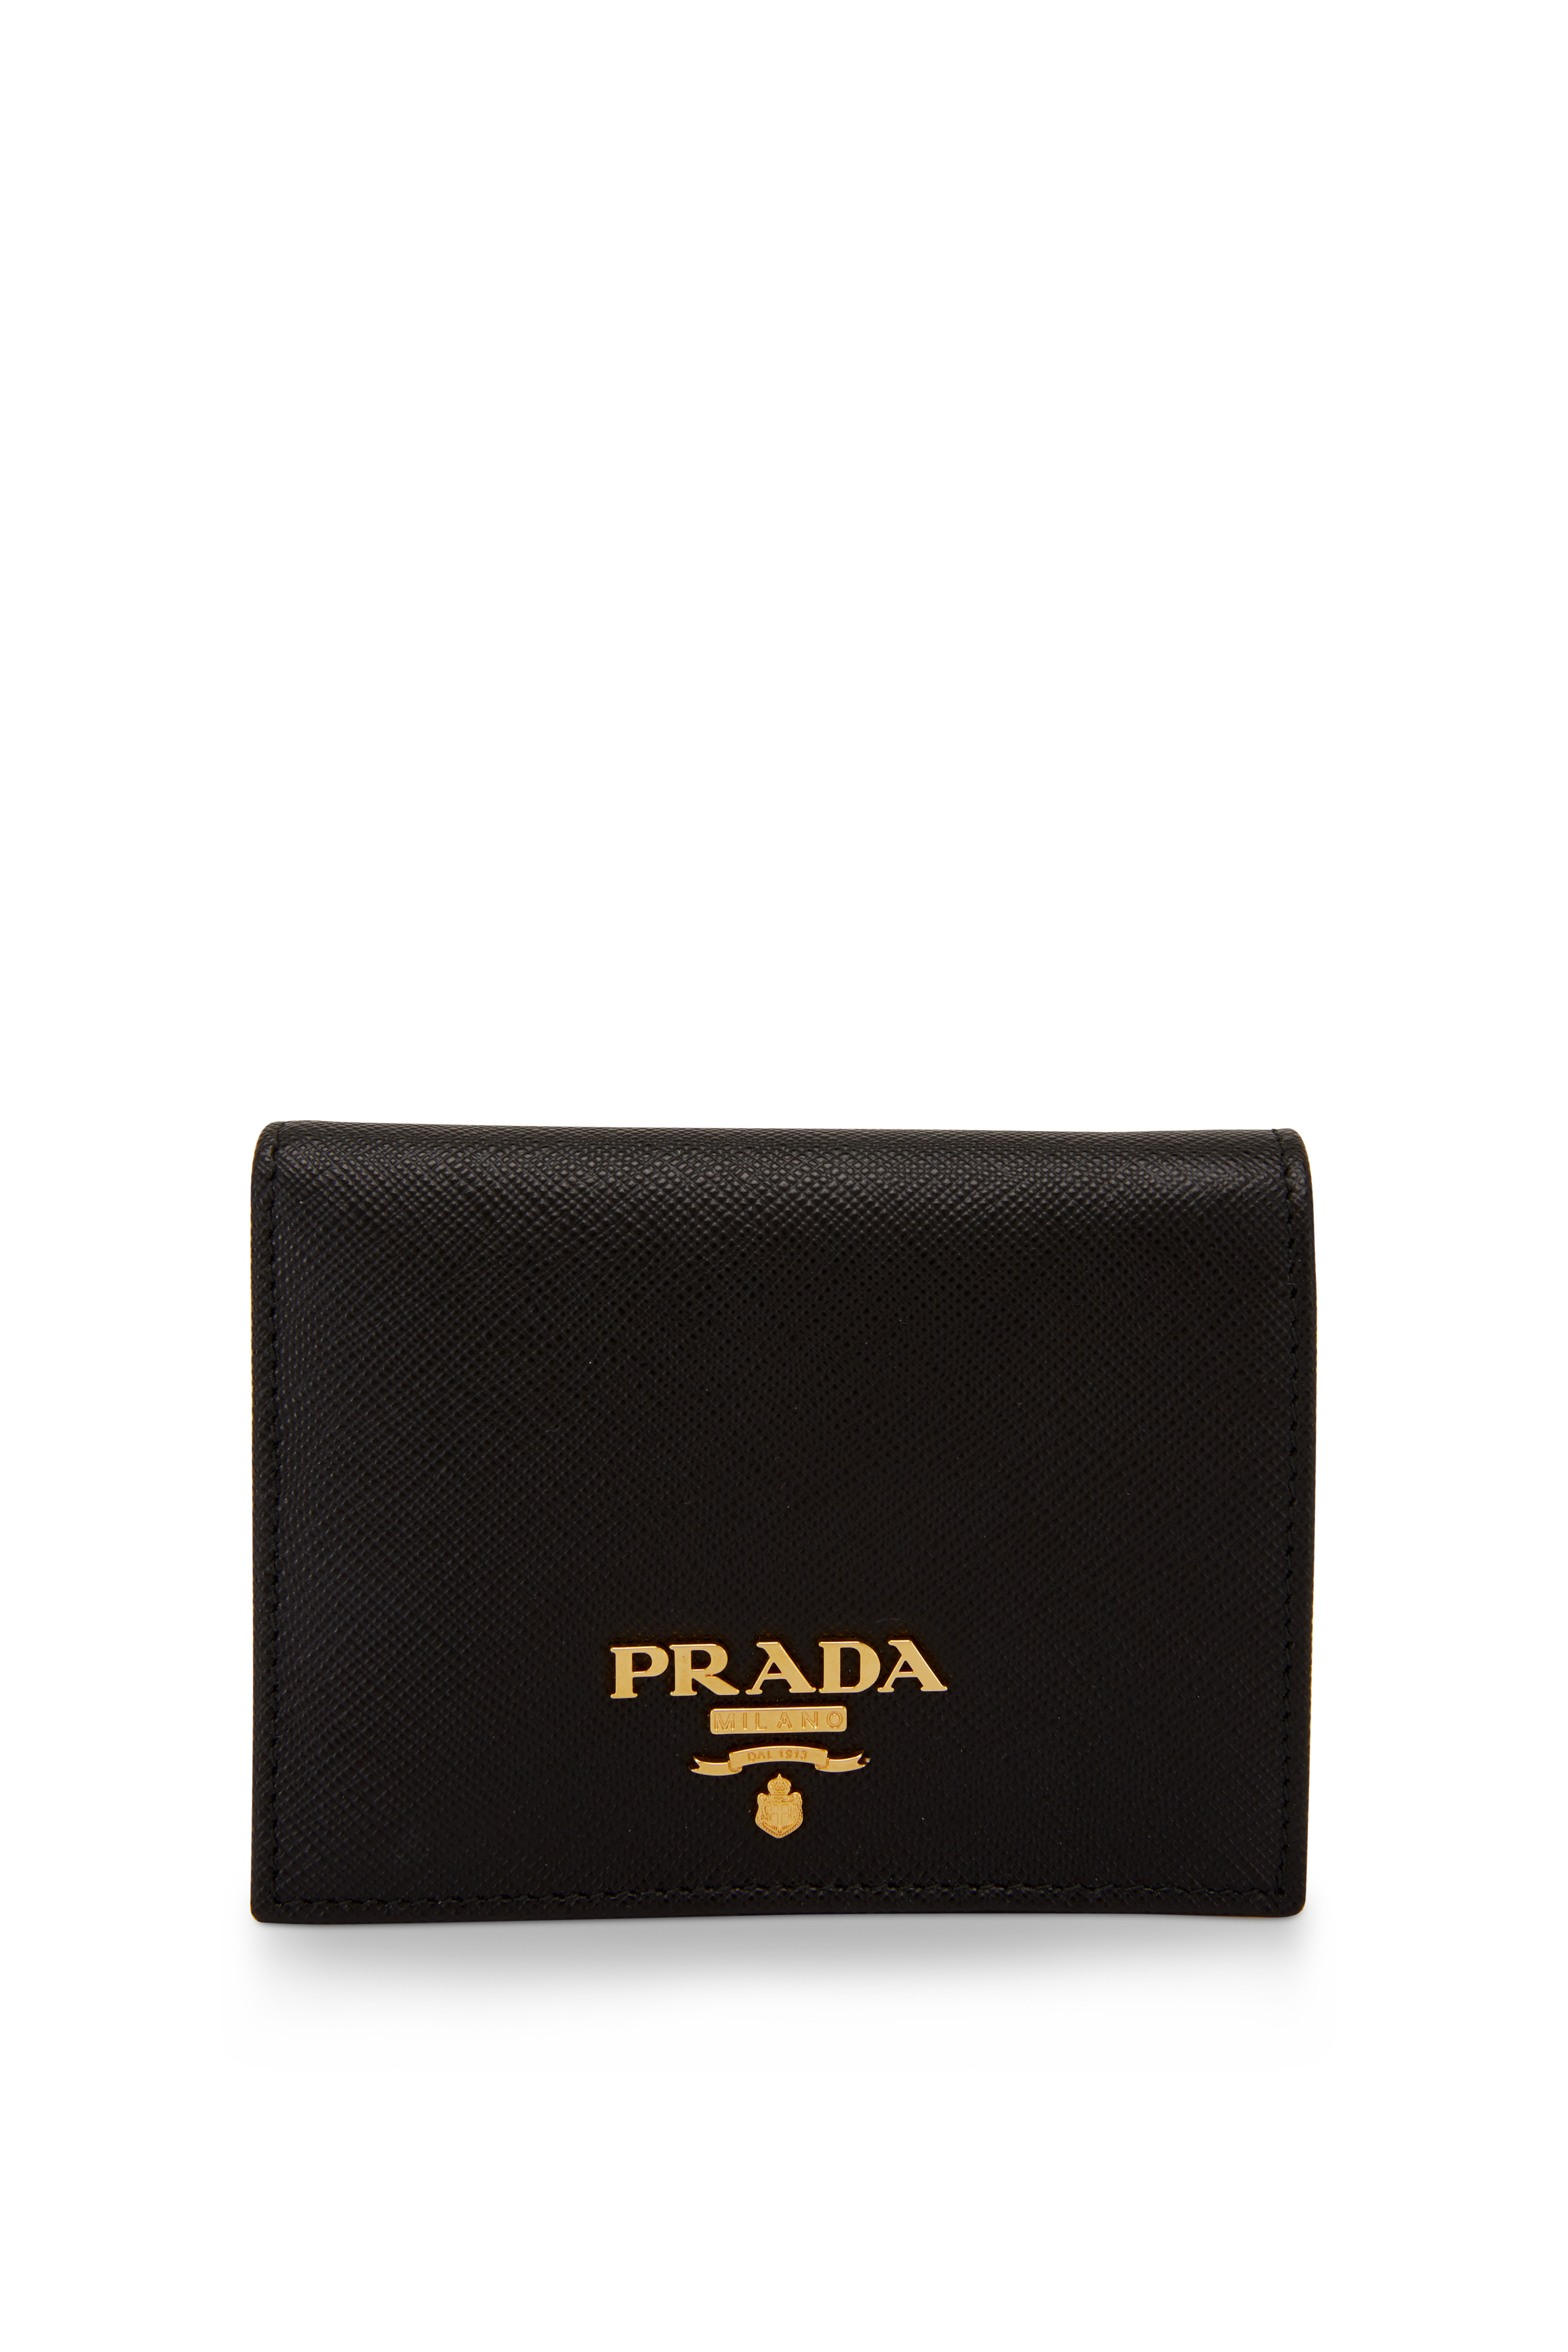 Prada - Black Leather Triangle Logo Wallet | Mitchell Stores